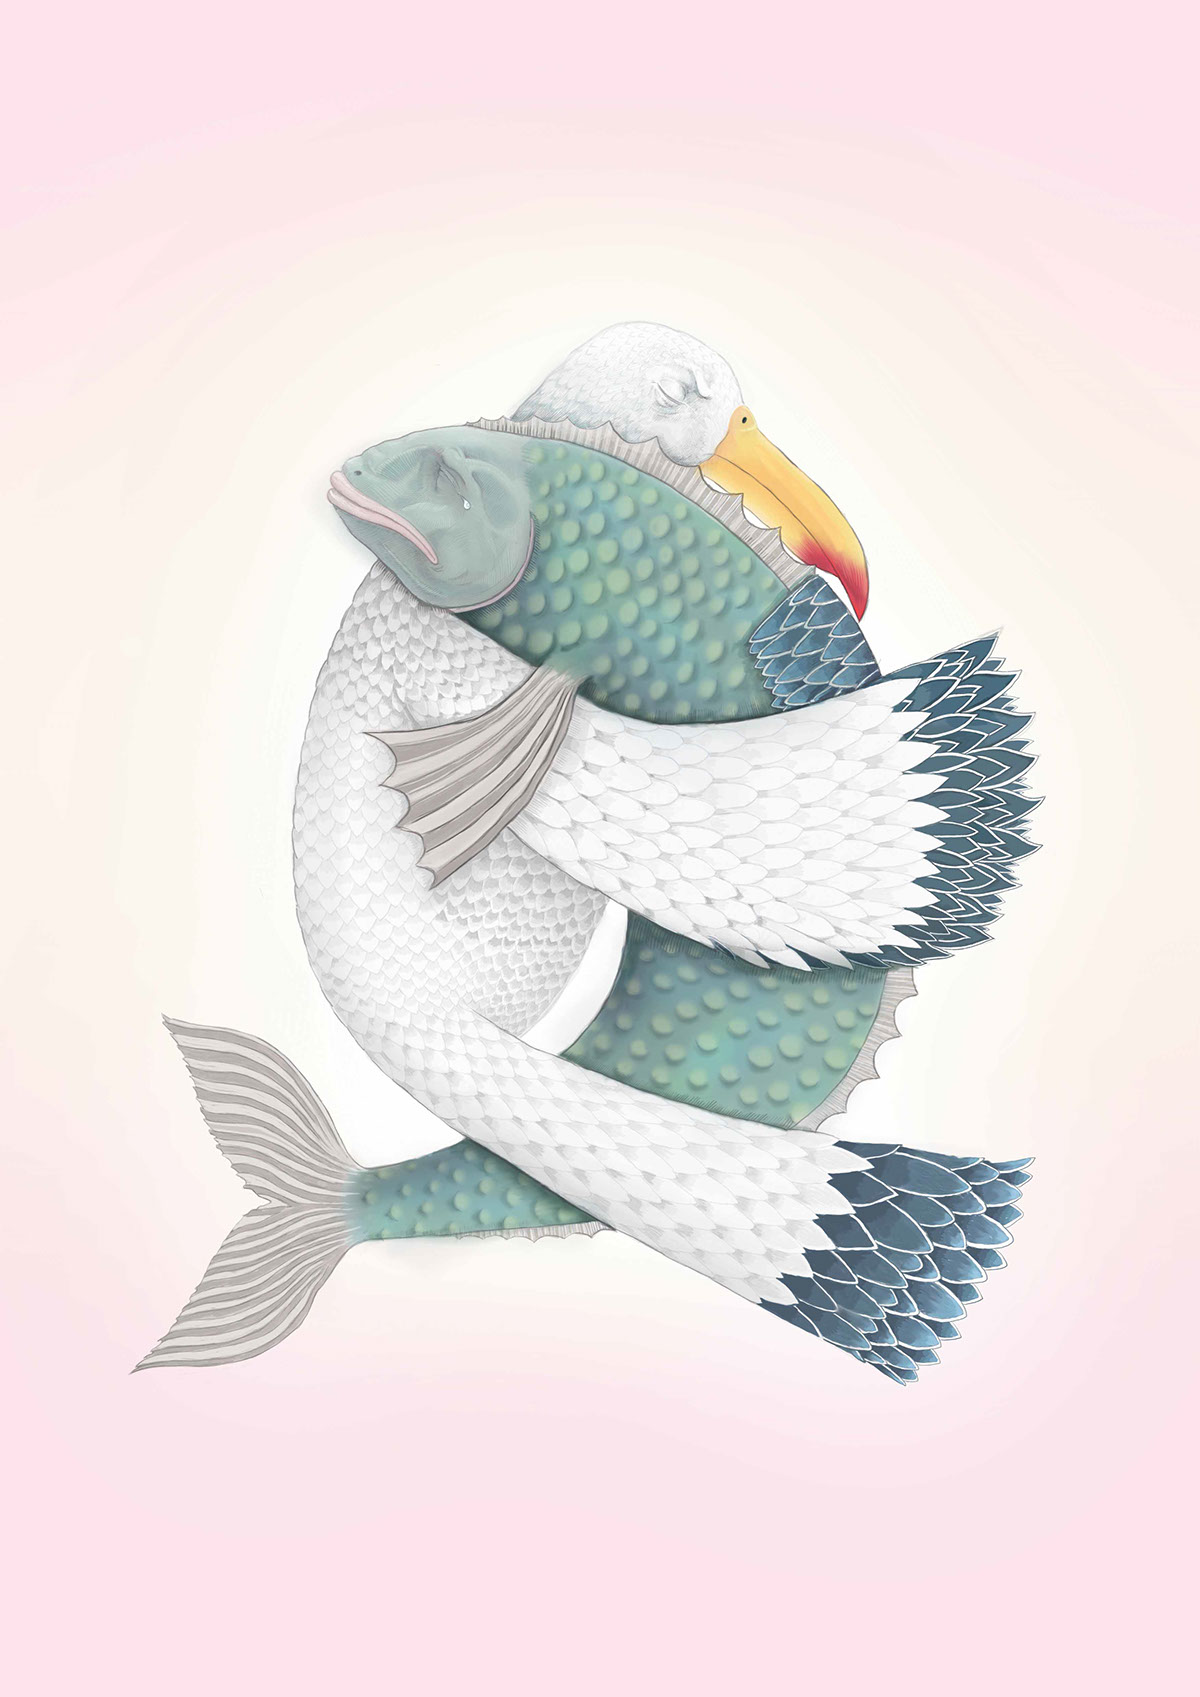 fish bird arka oda poster